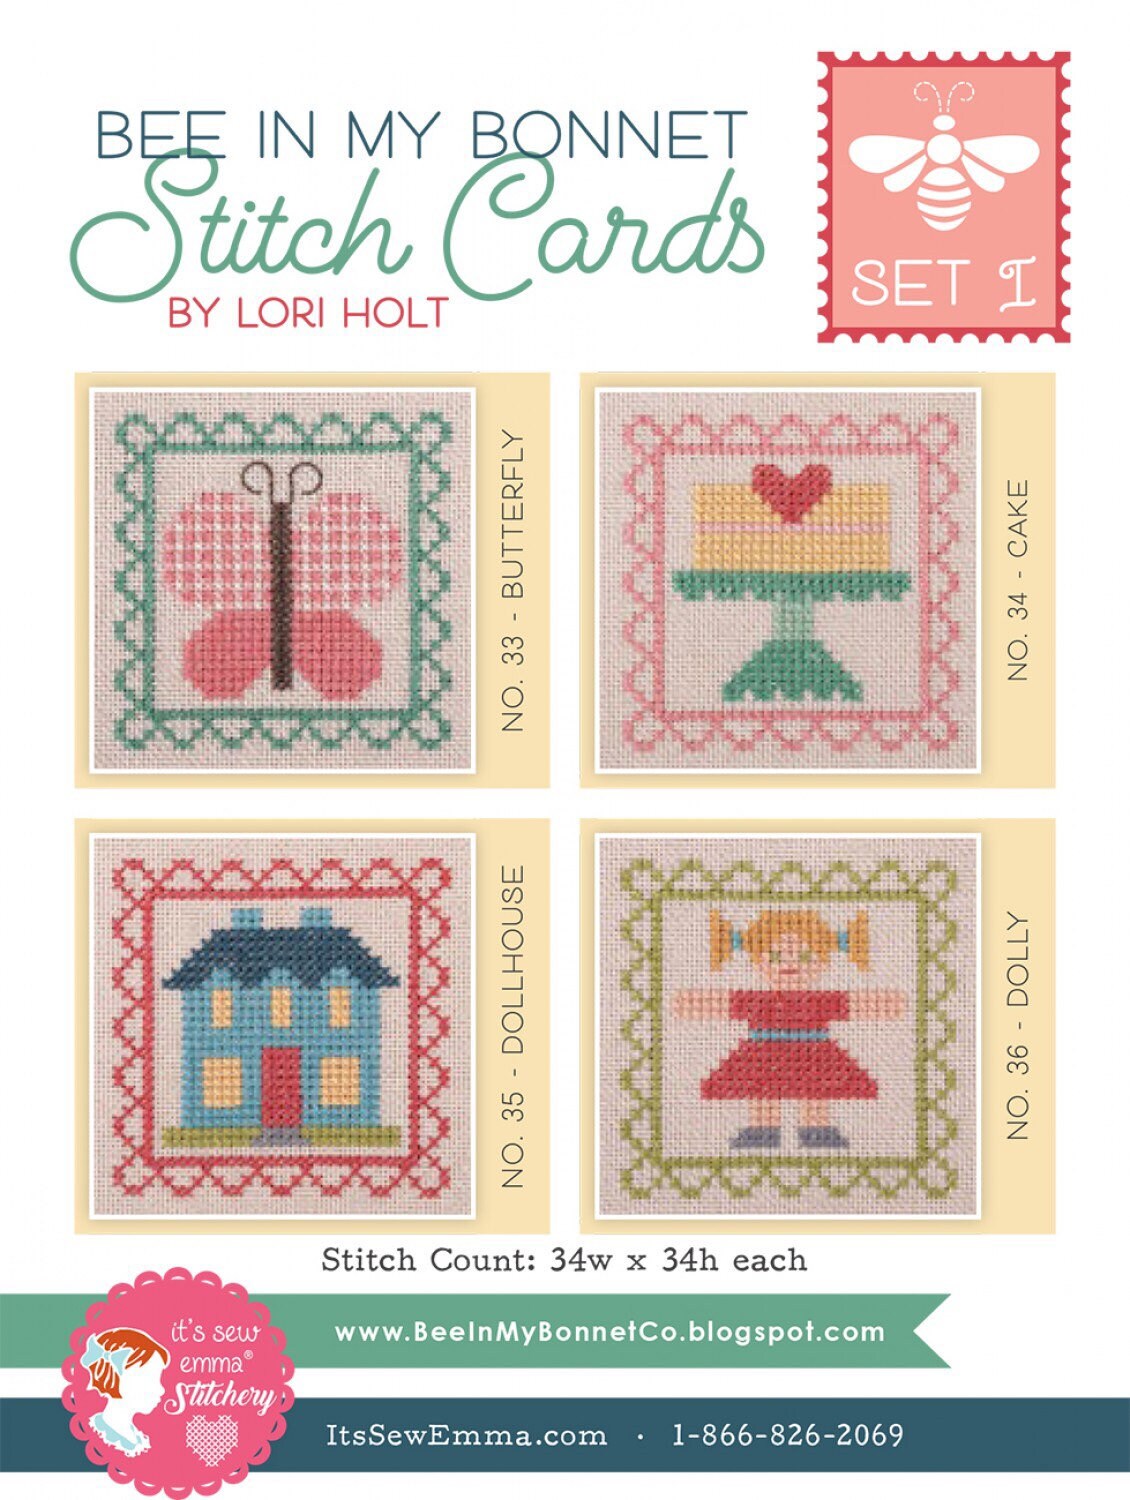 Stitch Cards Set I - Cross Stitch Pattern - It’s Sew Emma - Lori Holt - Bee In My Bonnet